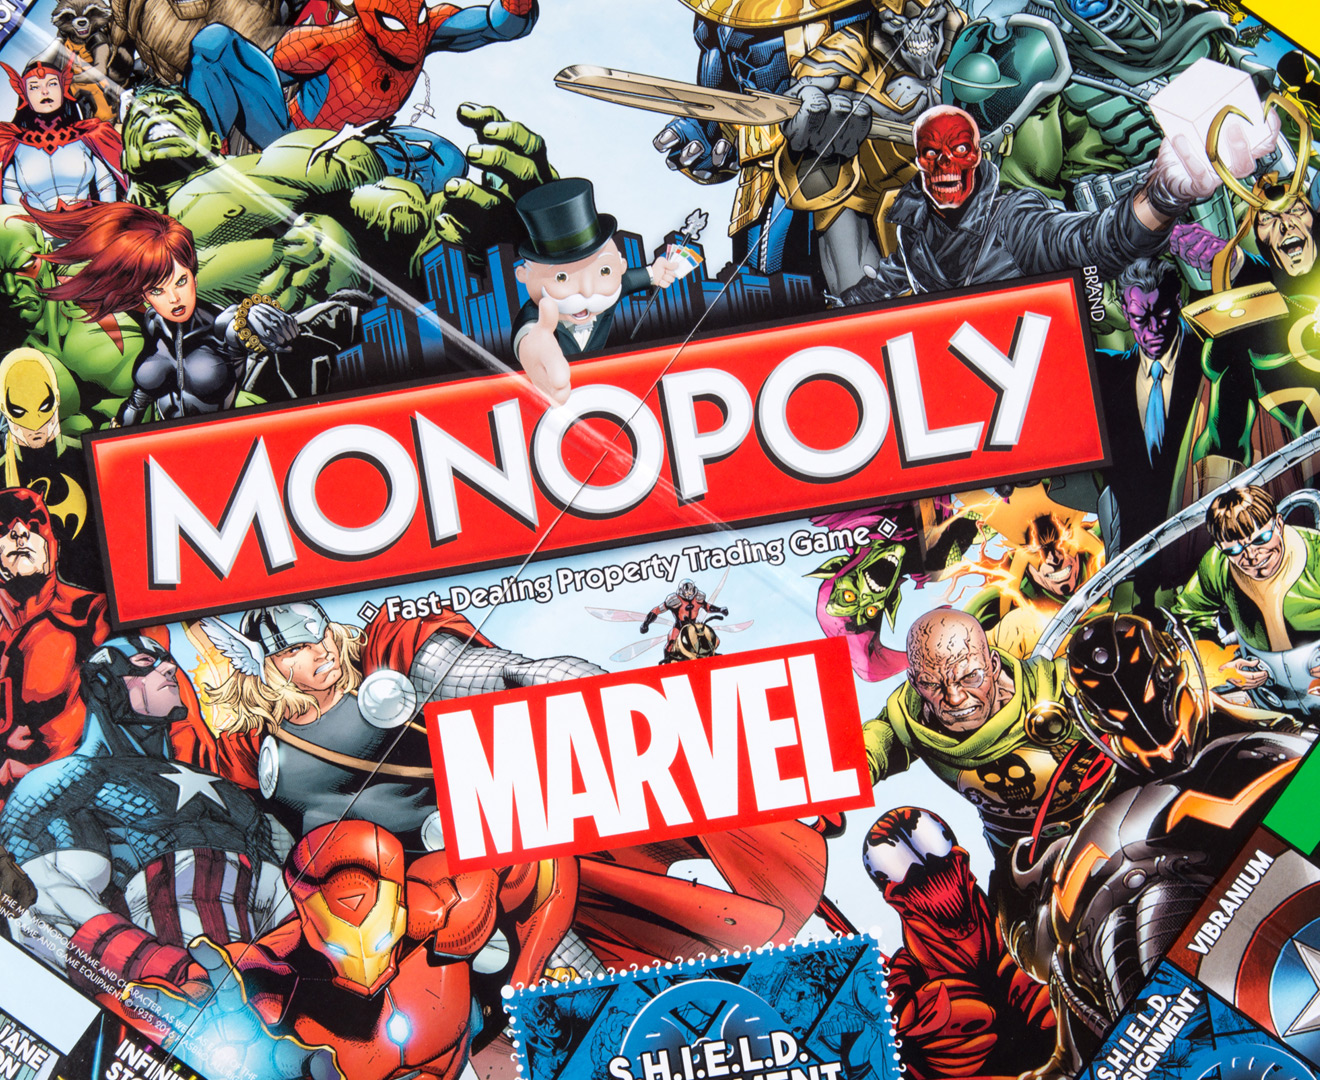 best marvel monopoly